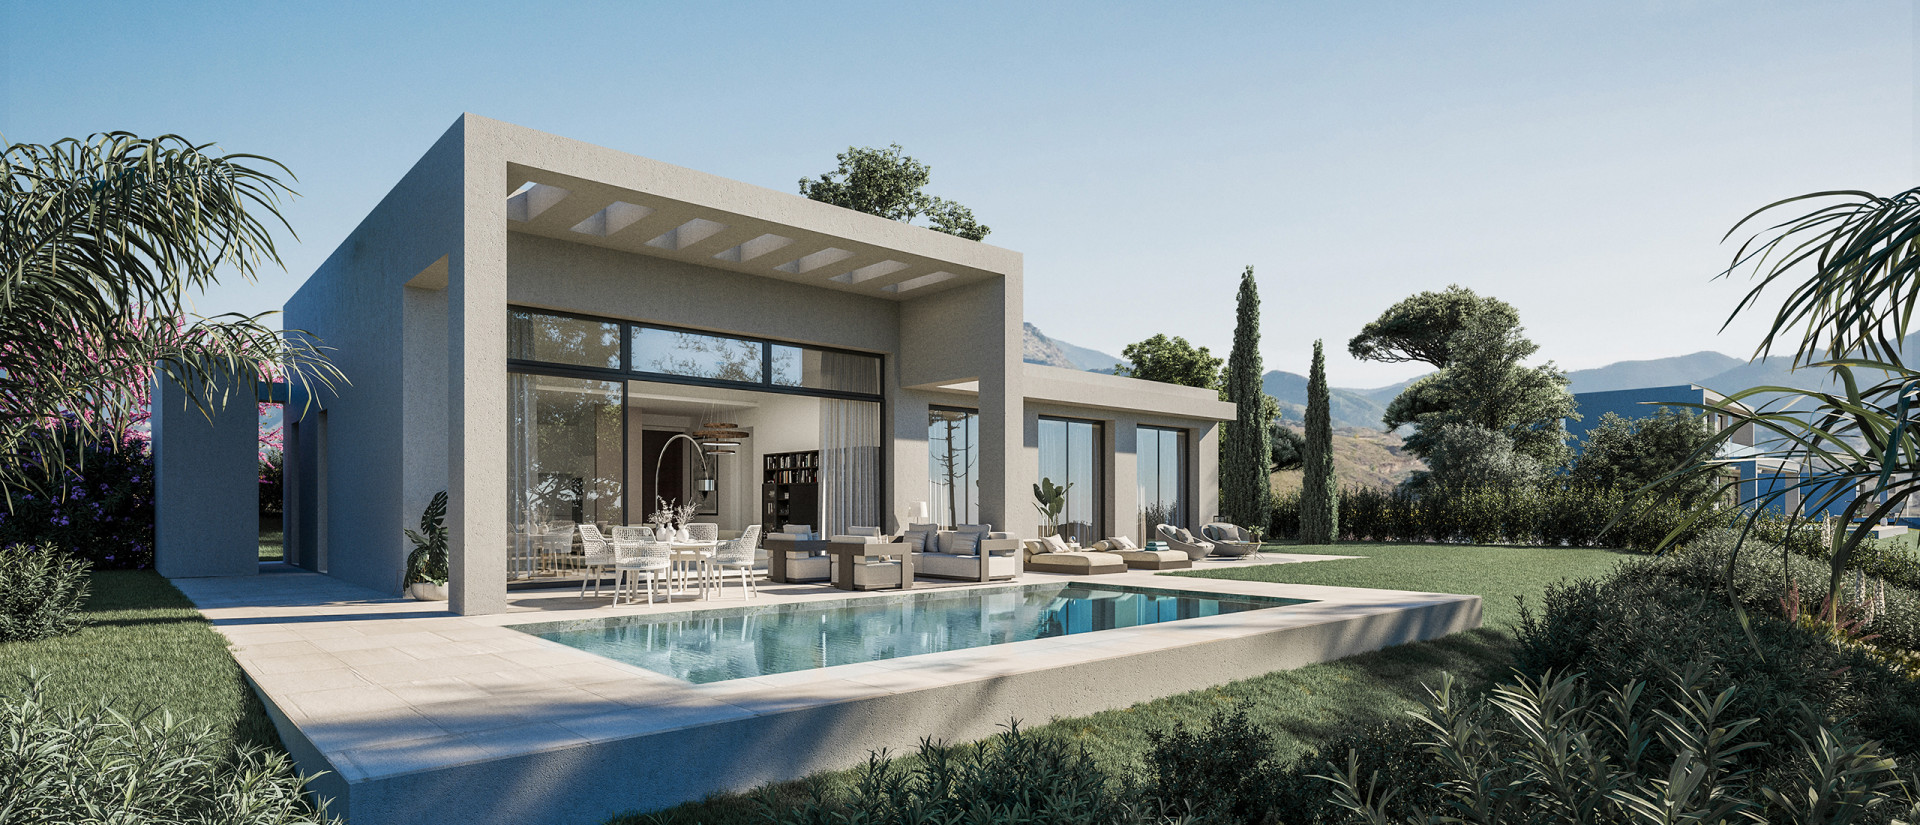 ARFV2201-1 Unique new villas with panoramic views under construction